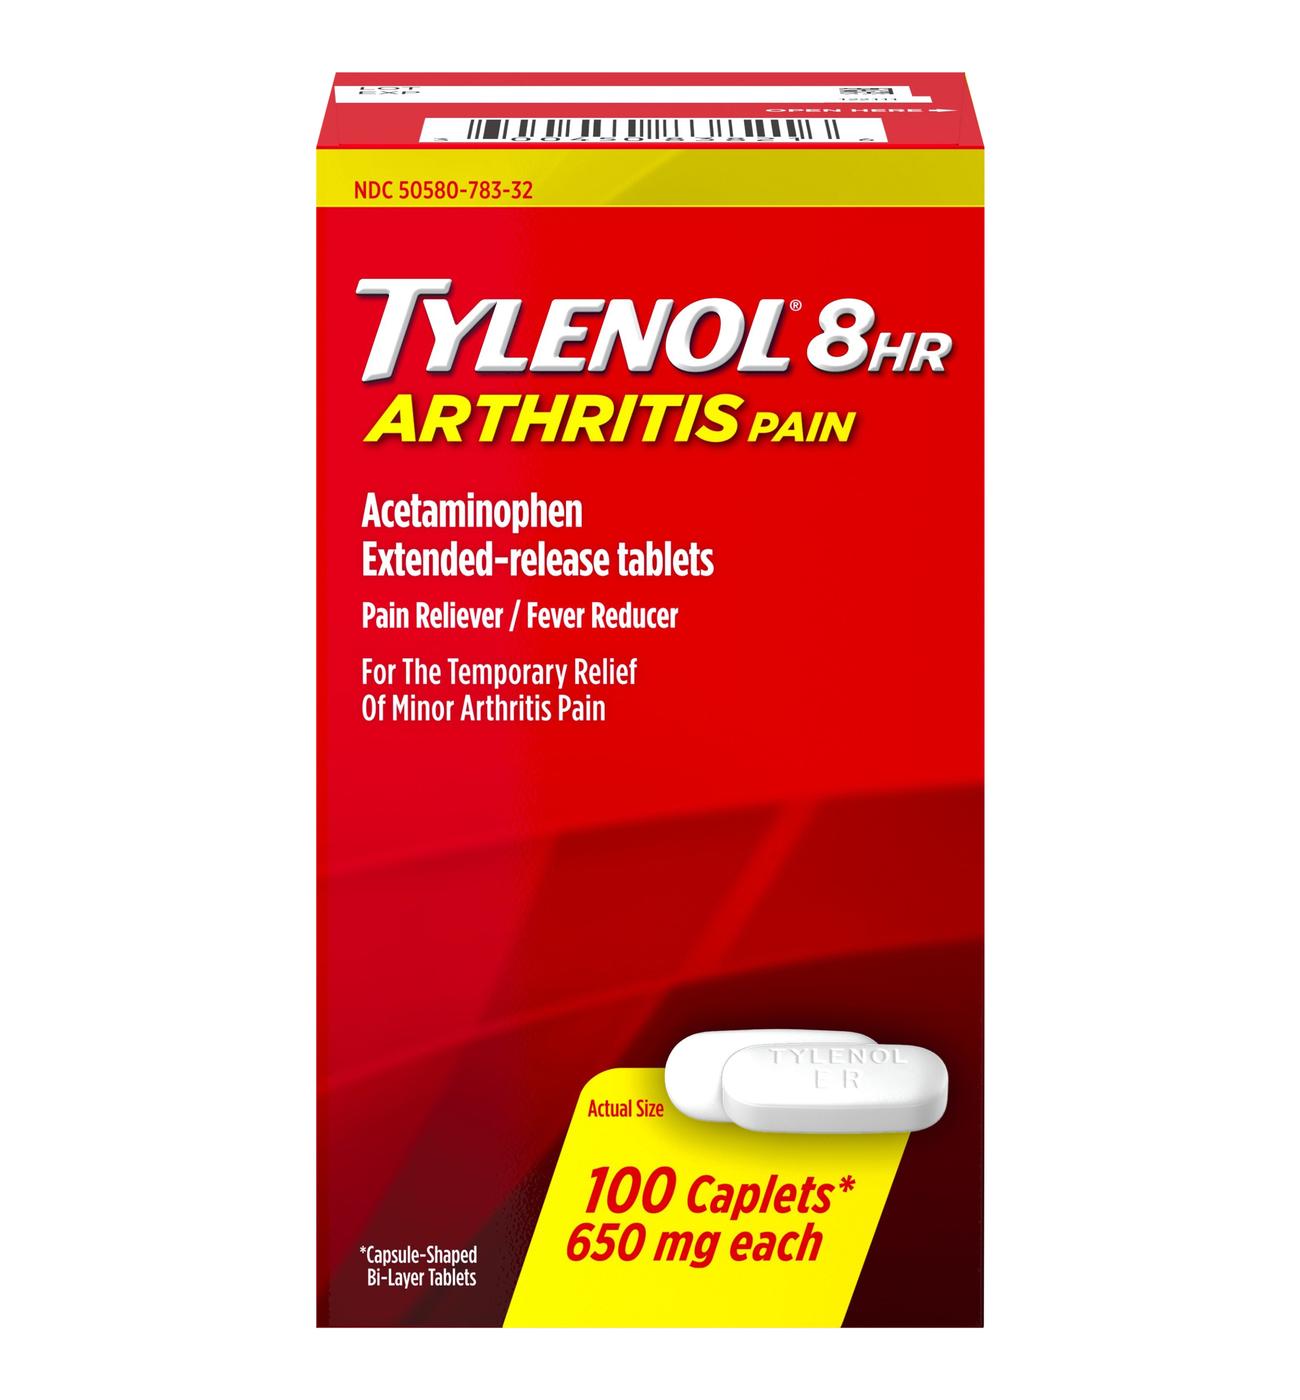 Tylenol 8 HR Arthritis Pain Extended Release Caplets - 650 Mg; image 1 of 6